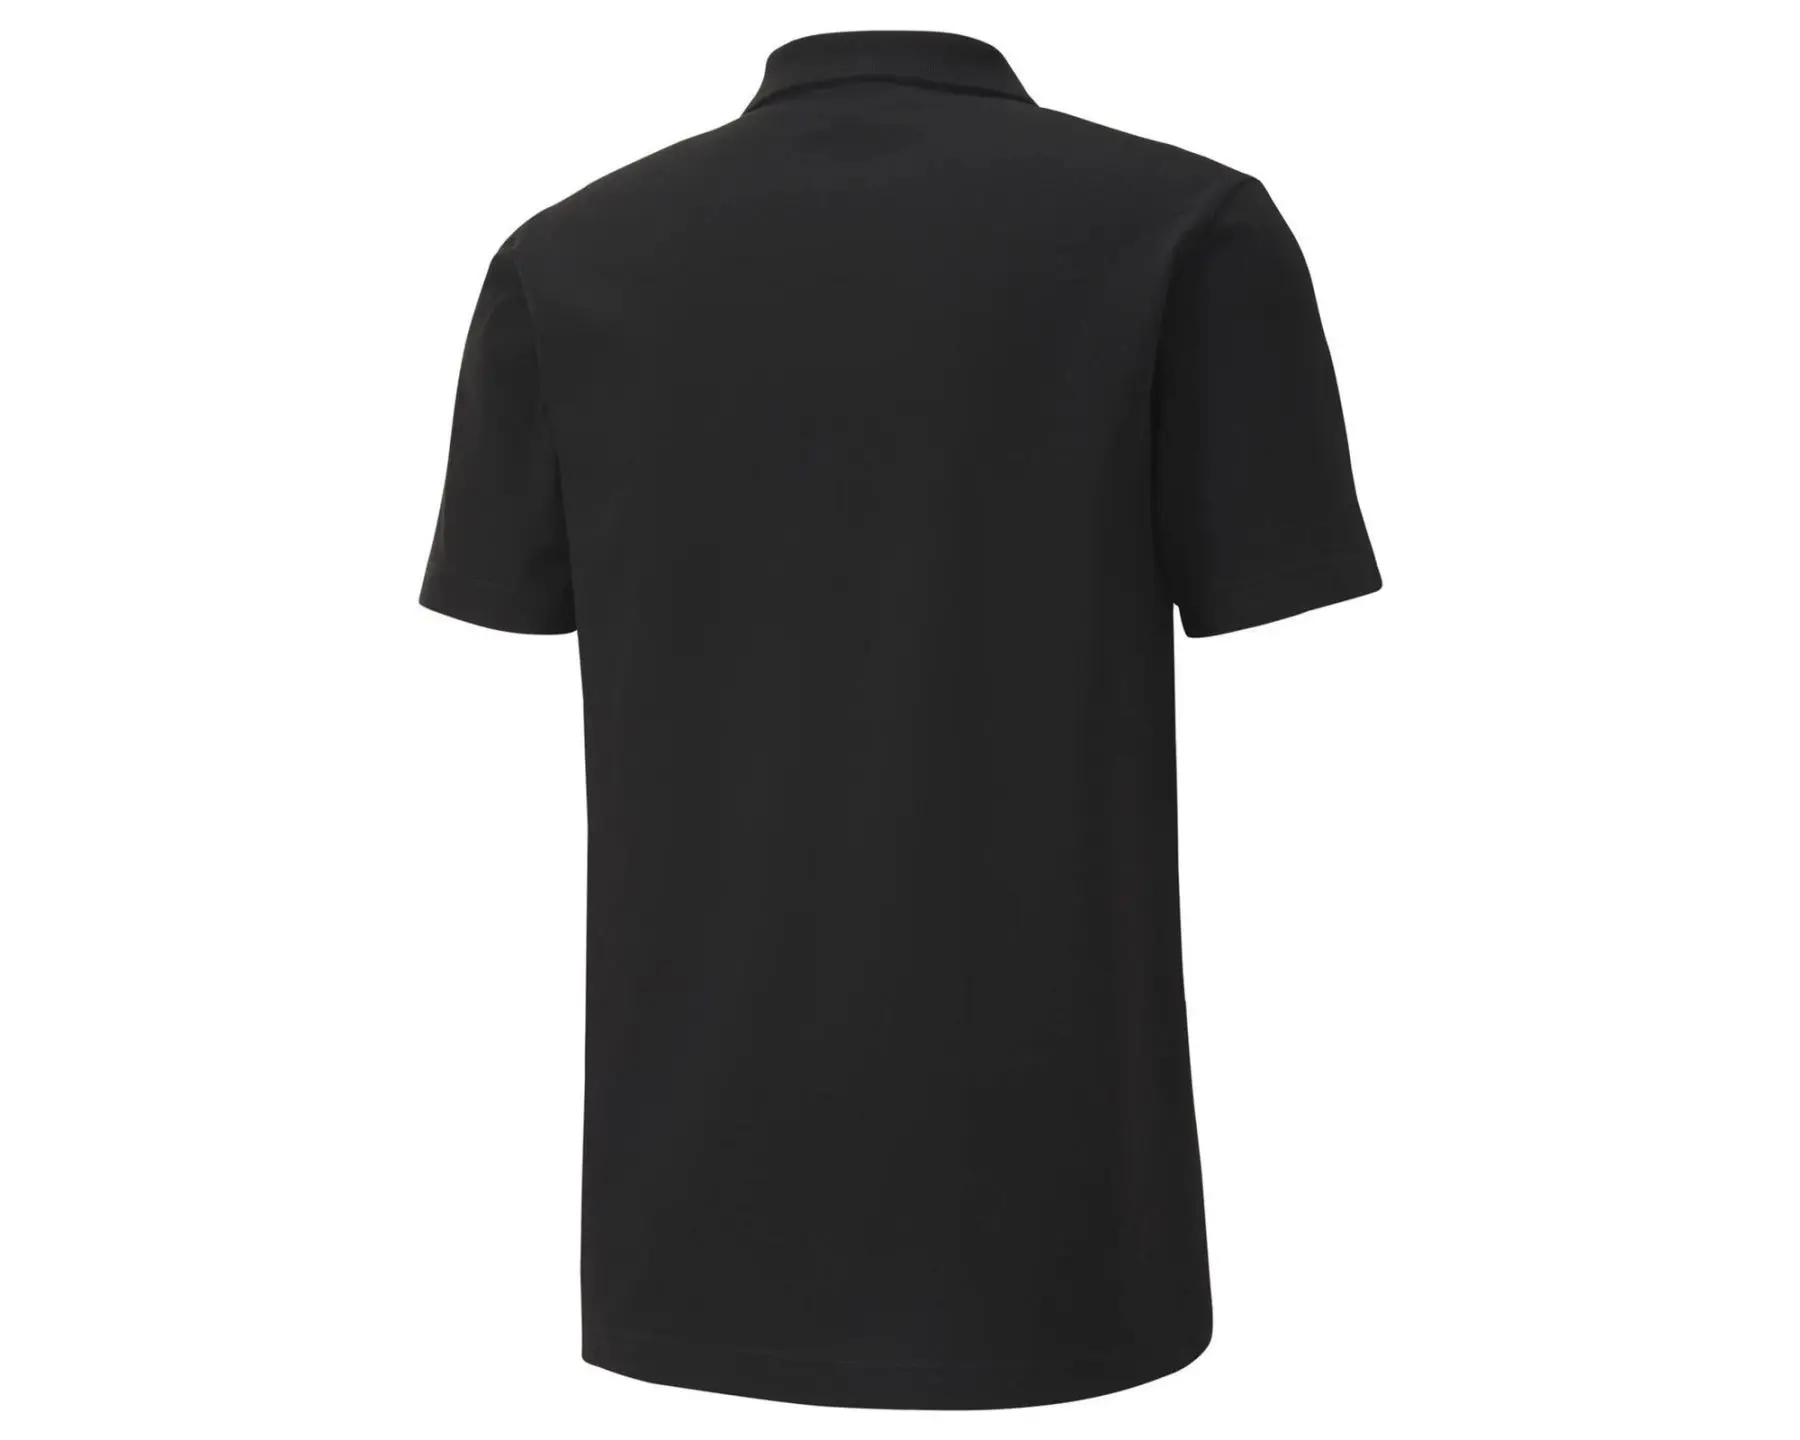 Puma Original Polo T-shirt Dress Shirts Running Gym Men Casual Short-Sleeved Slim Compression Sports Fitness Quick